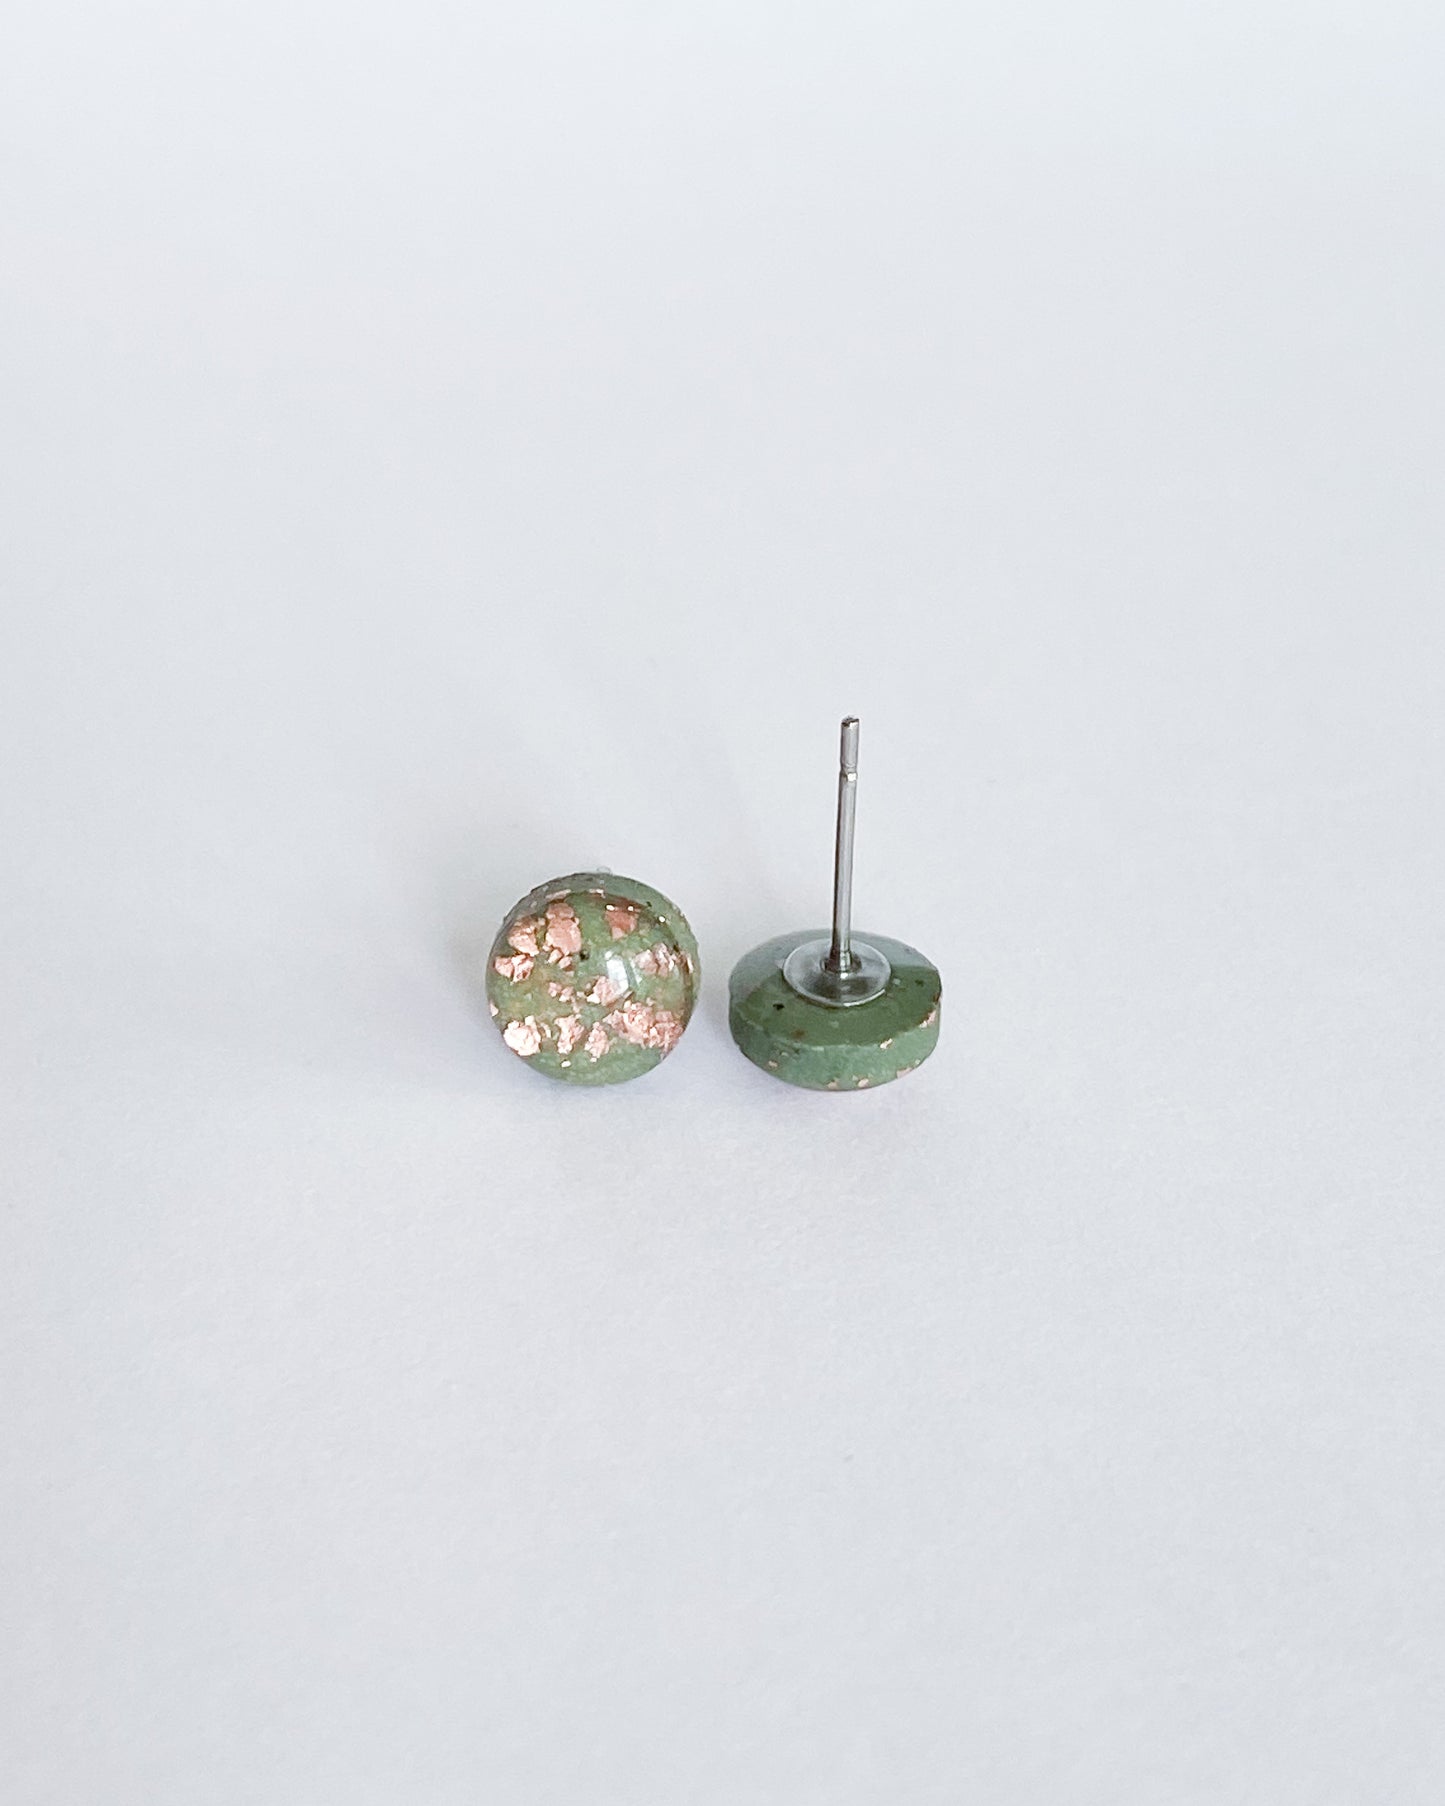 Tiny emerald earrings freeshipping - Ollijewelry